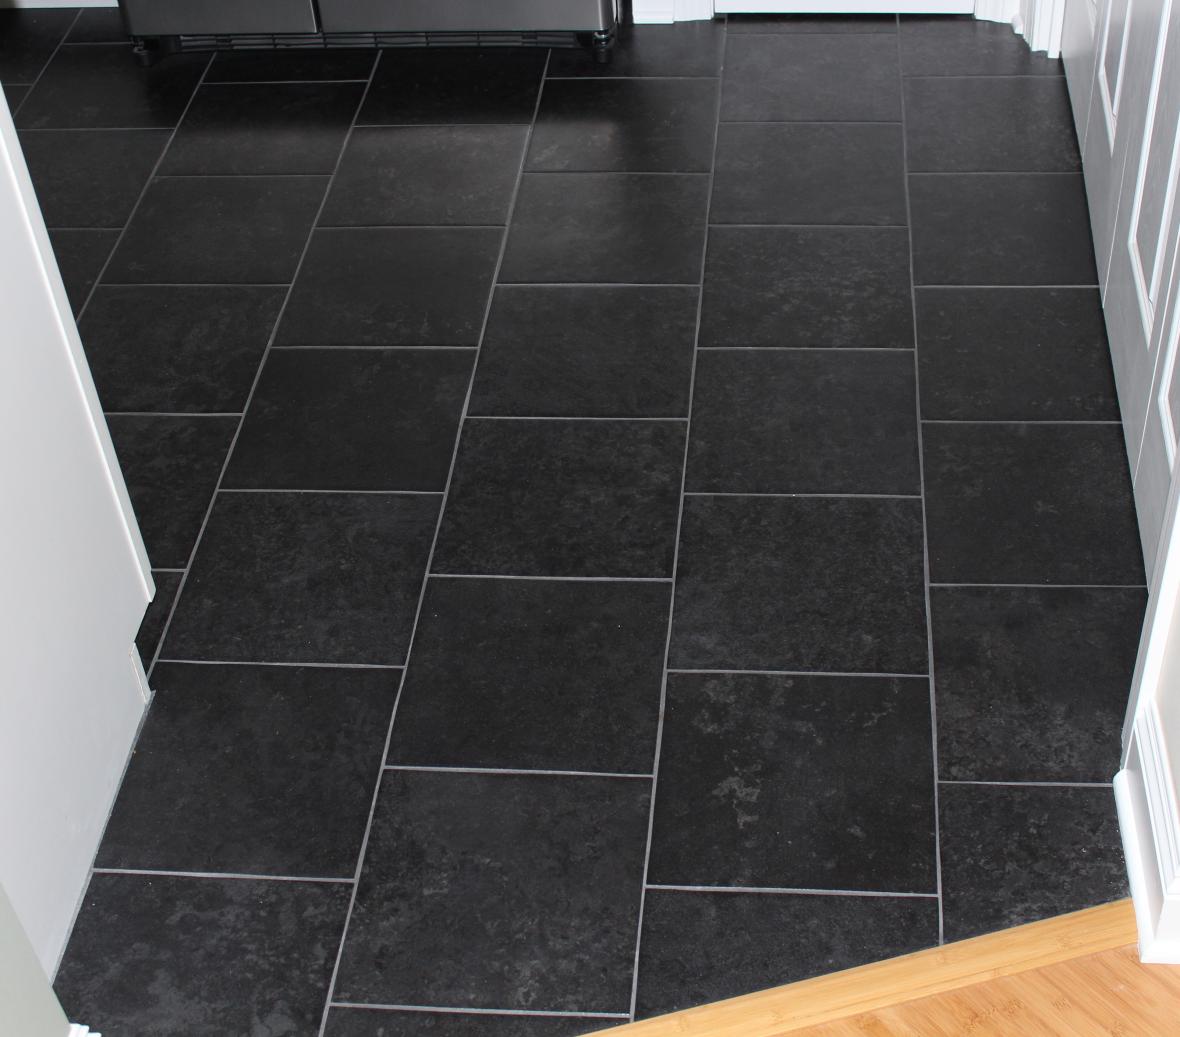 kitchen floor tiles black photo - 3